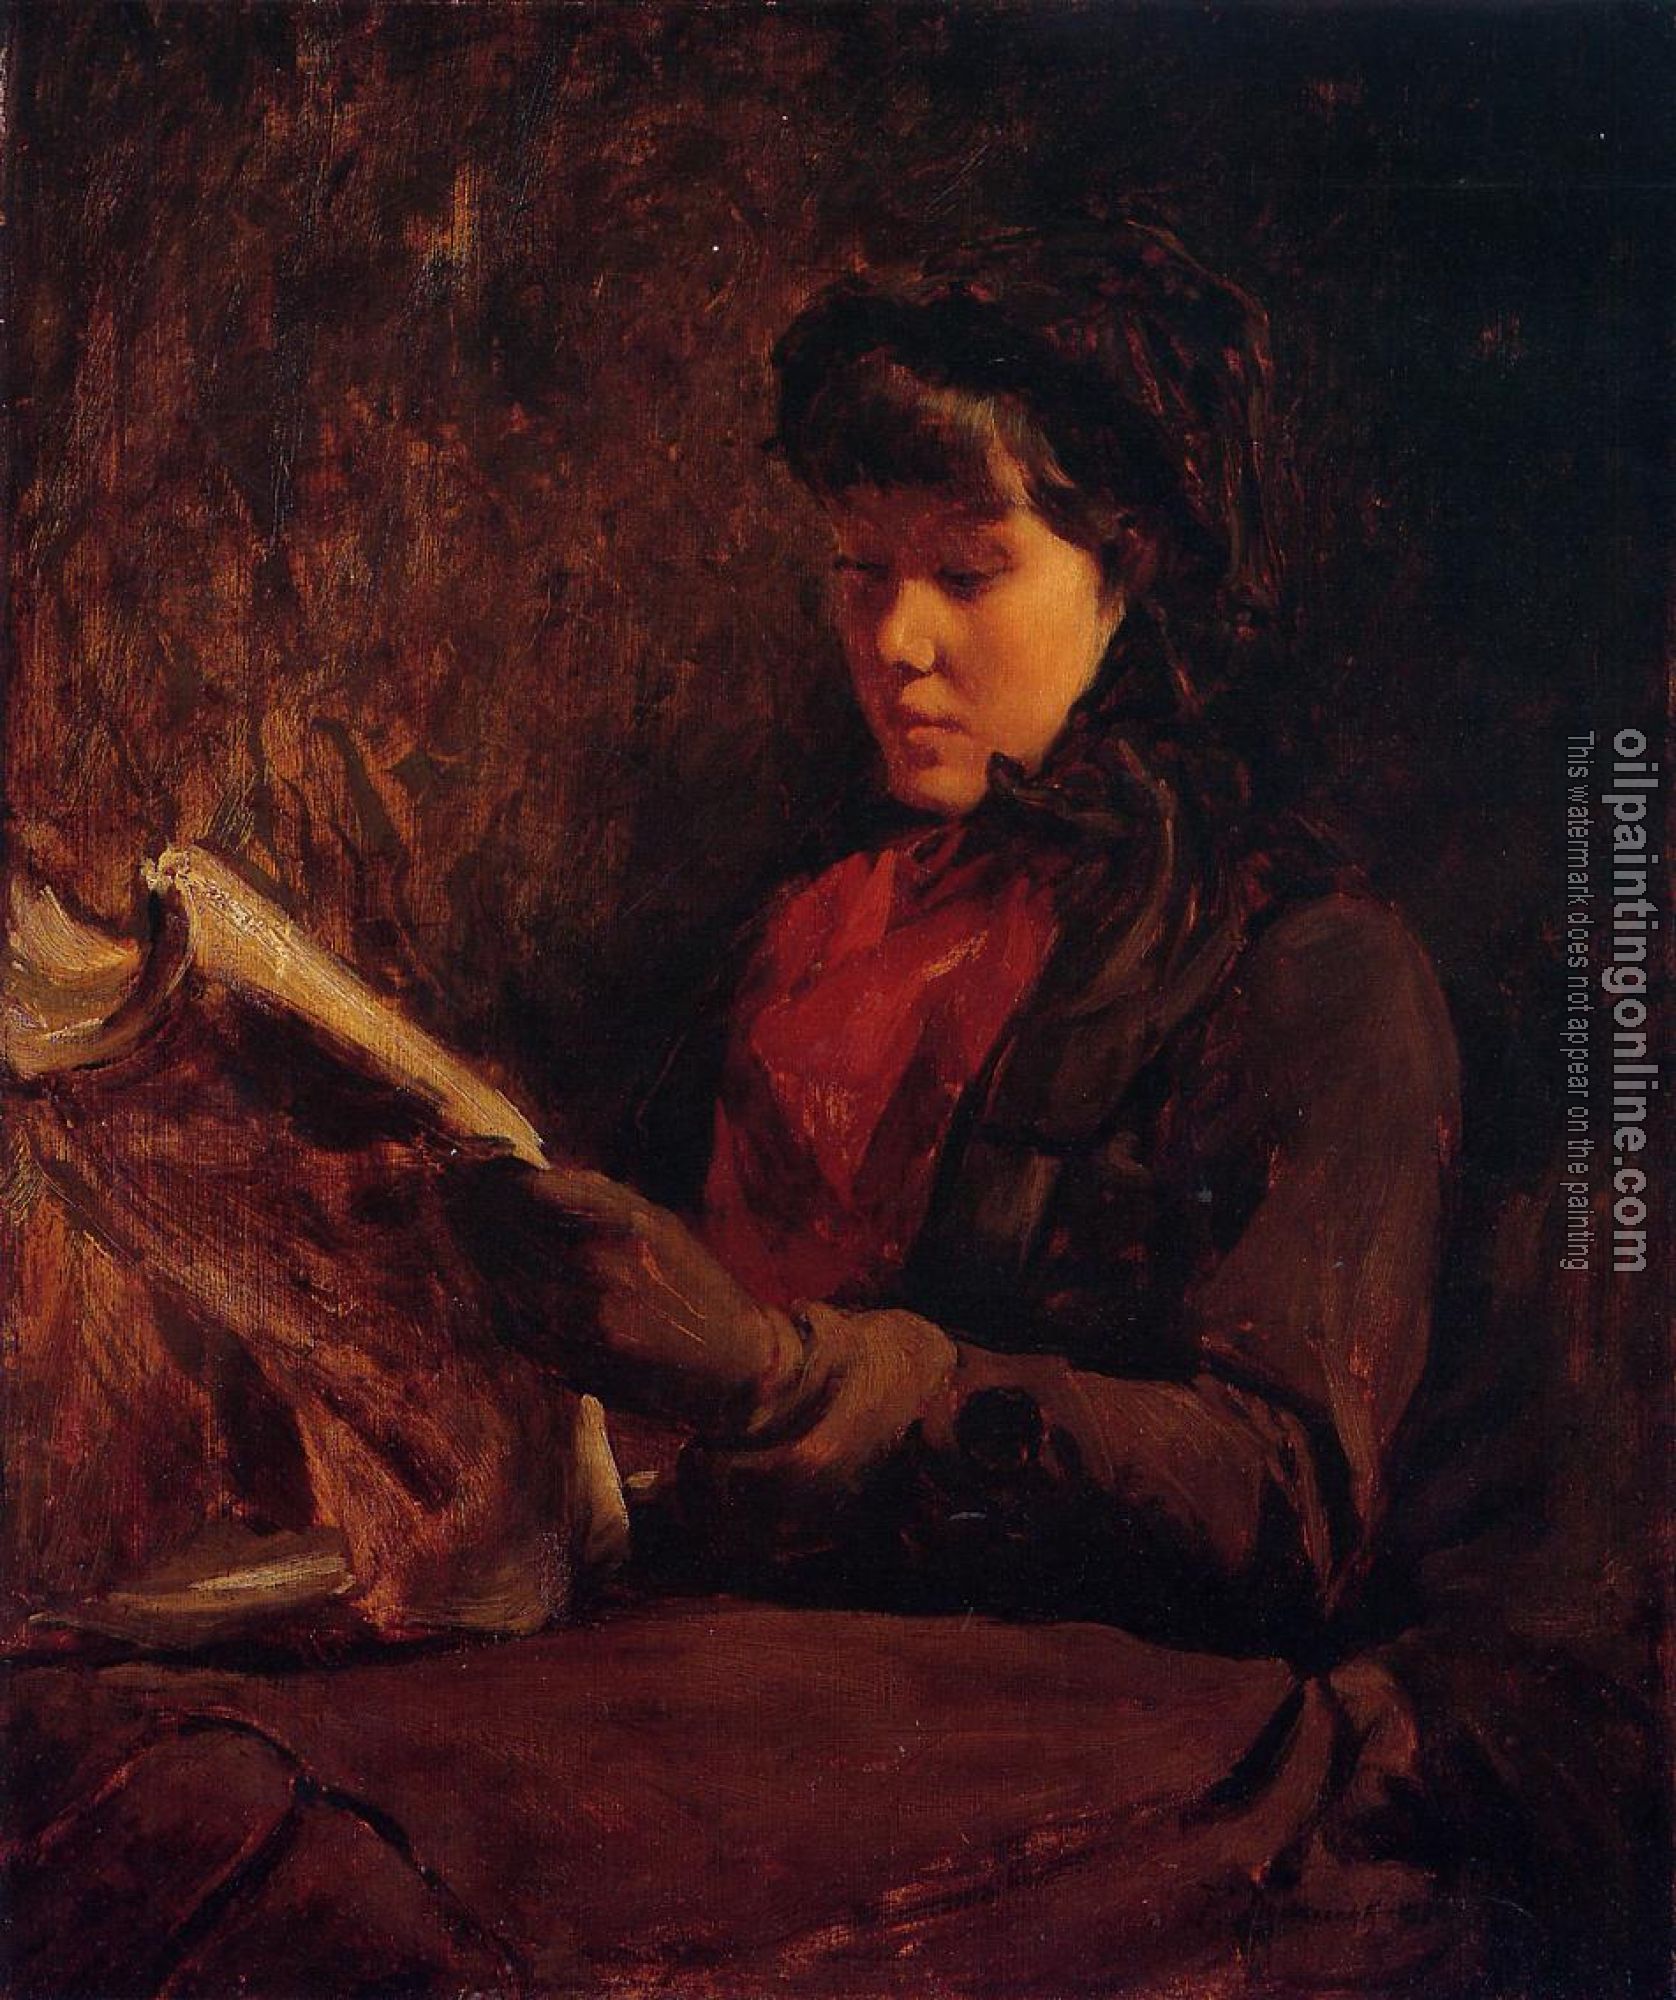 Frank Duveneck - Girl Reading